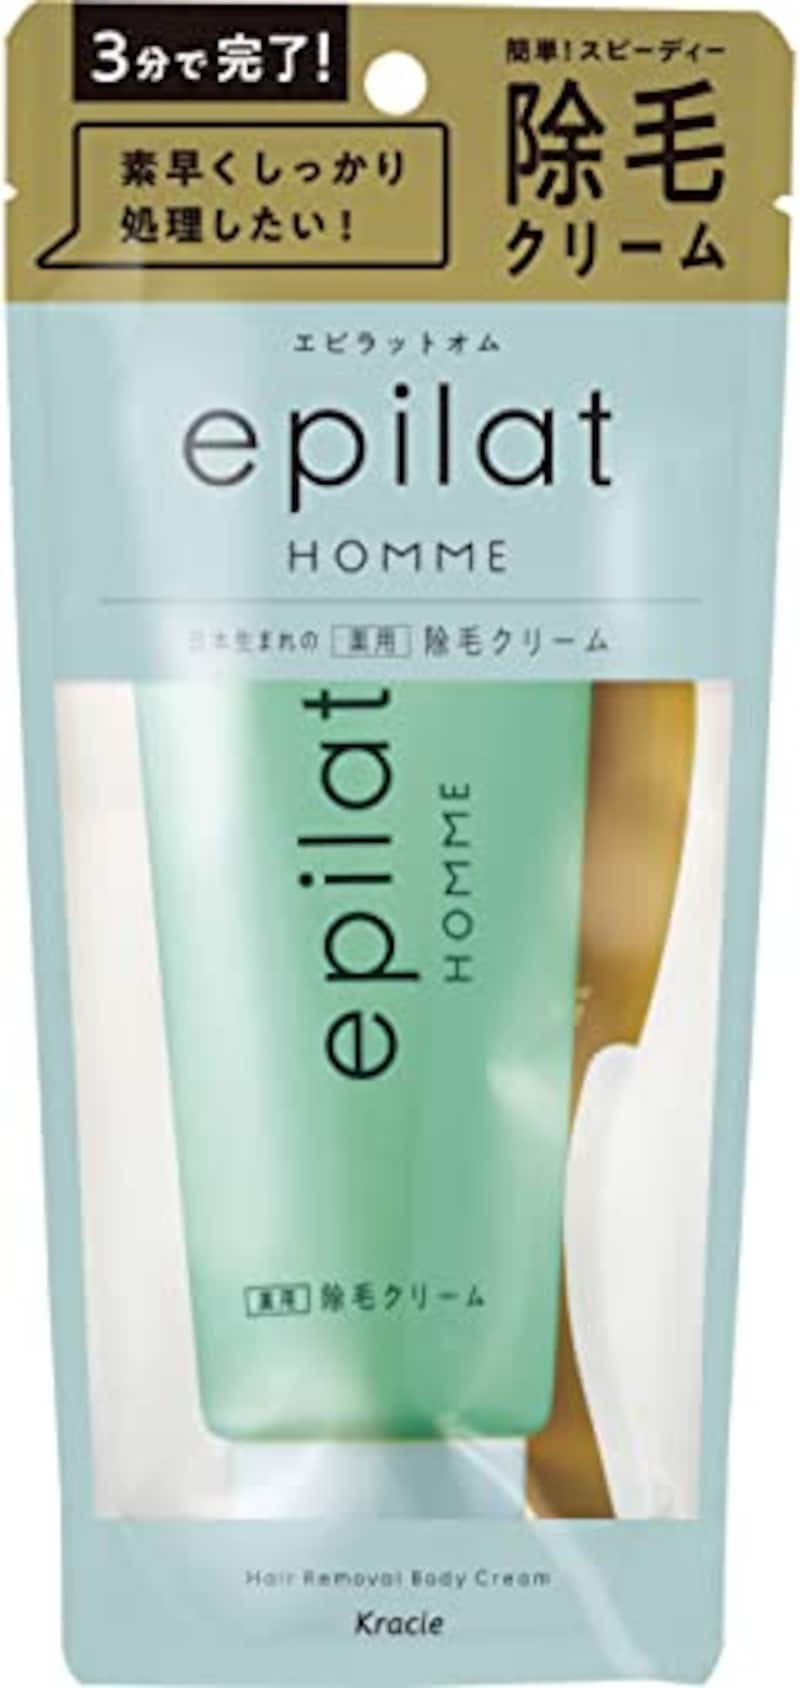 epilat（エピラット）,エピラットオム 薬用除毛クリーム